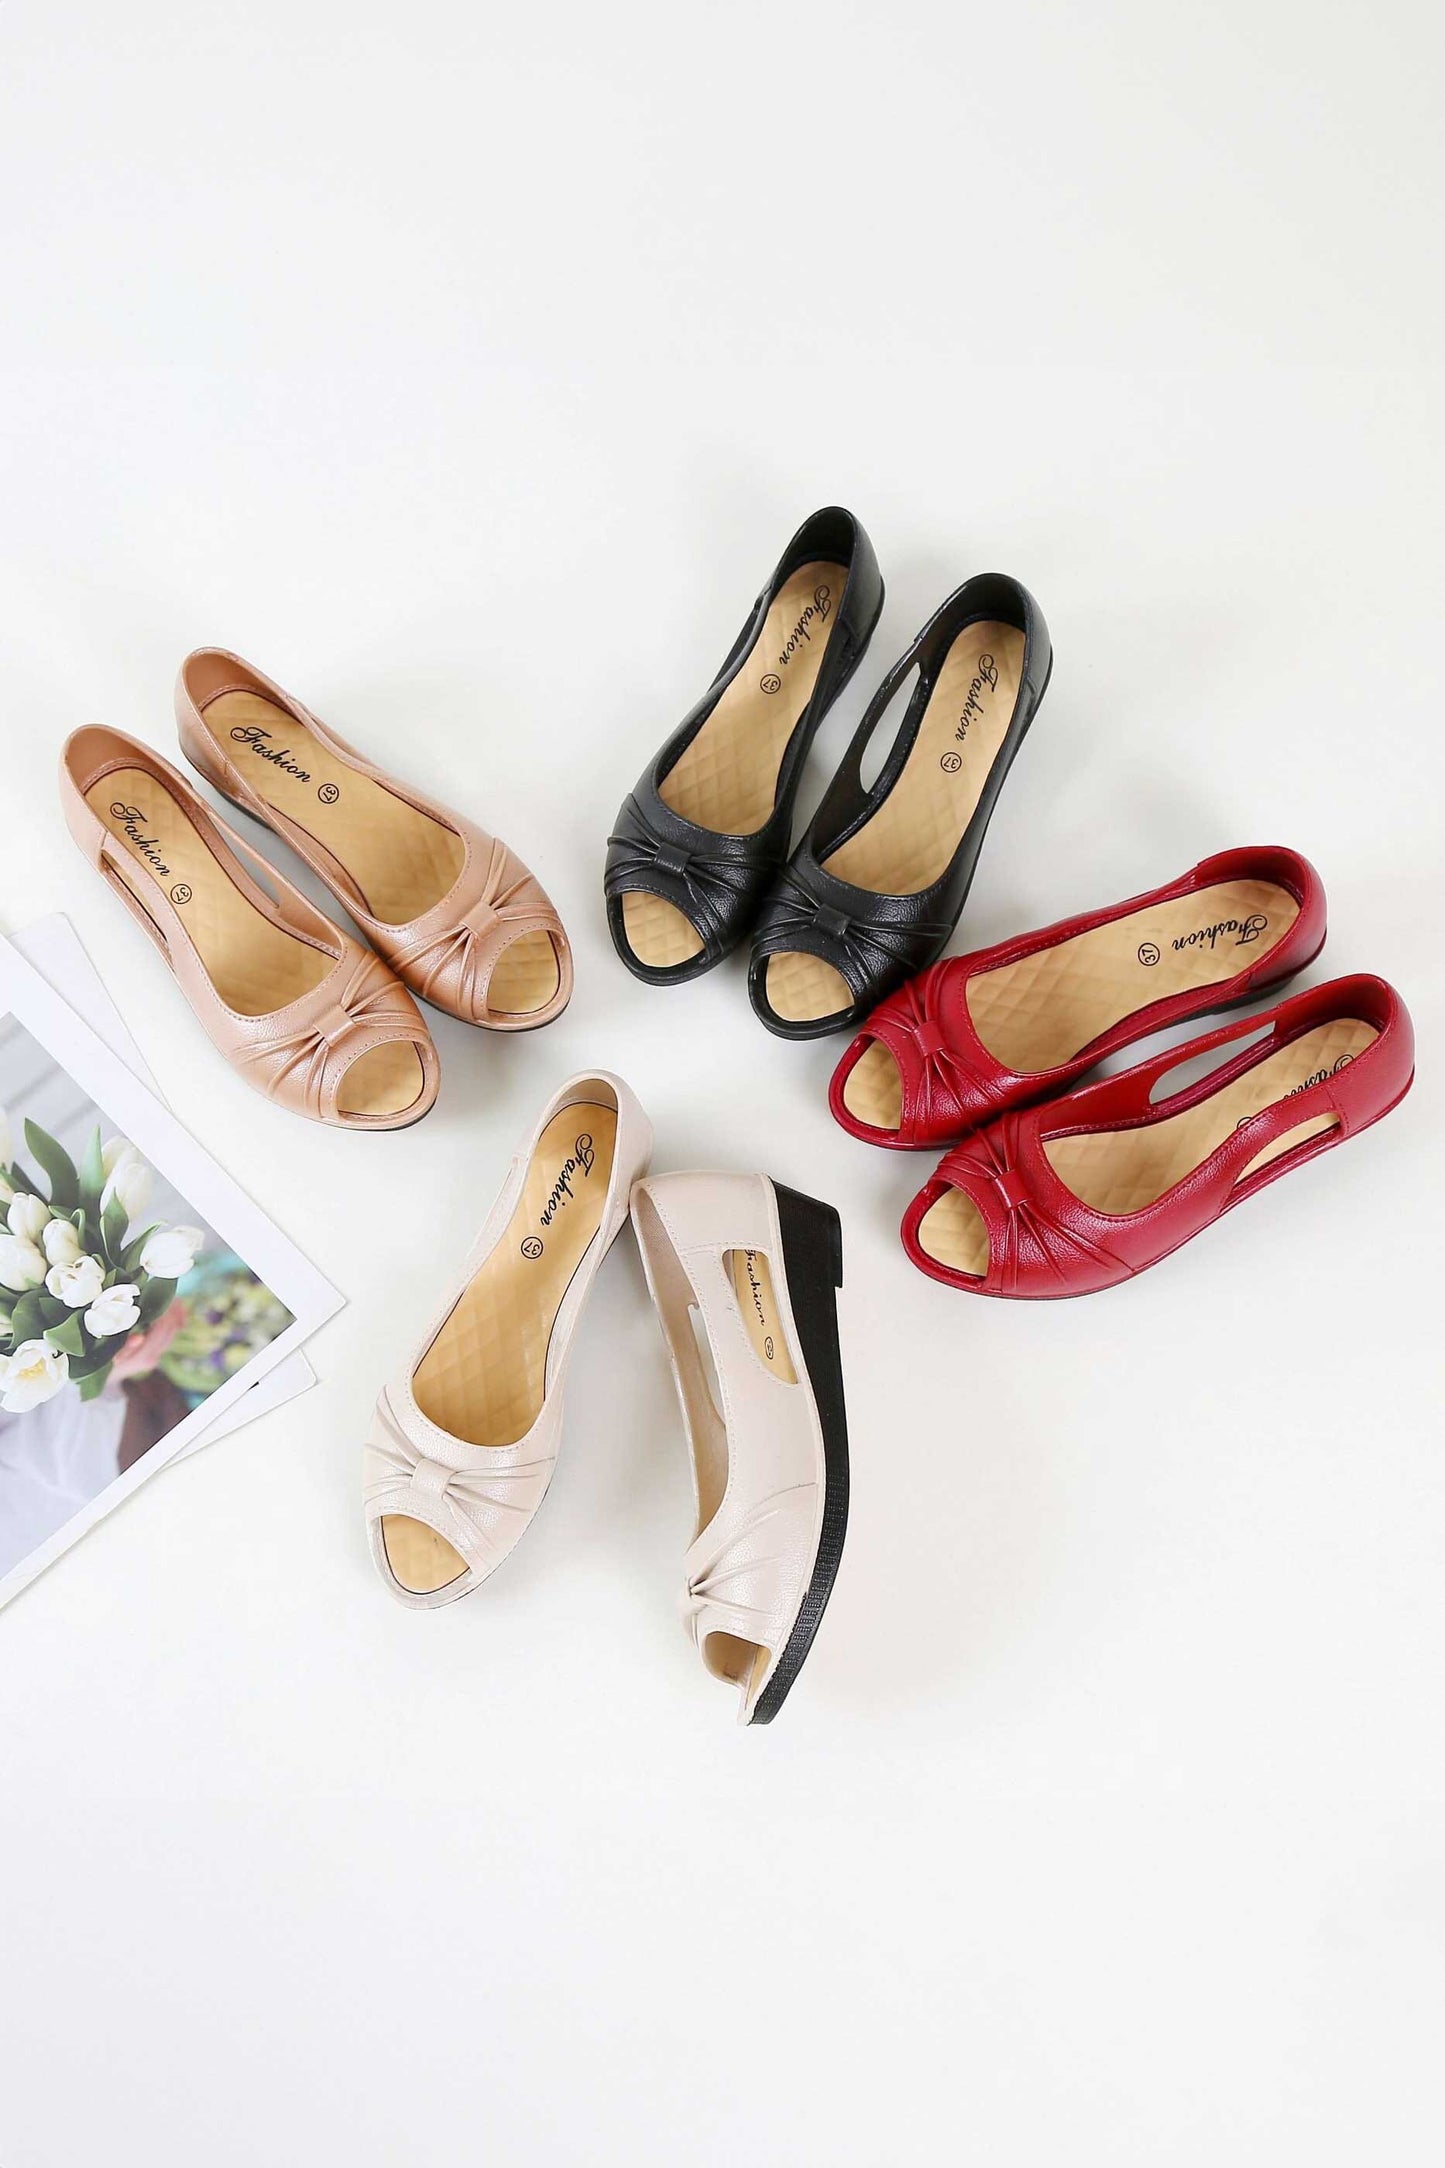 Fashion Women's Soft Sole Middle-Heel Pump Shoes